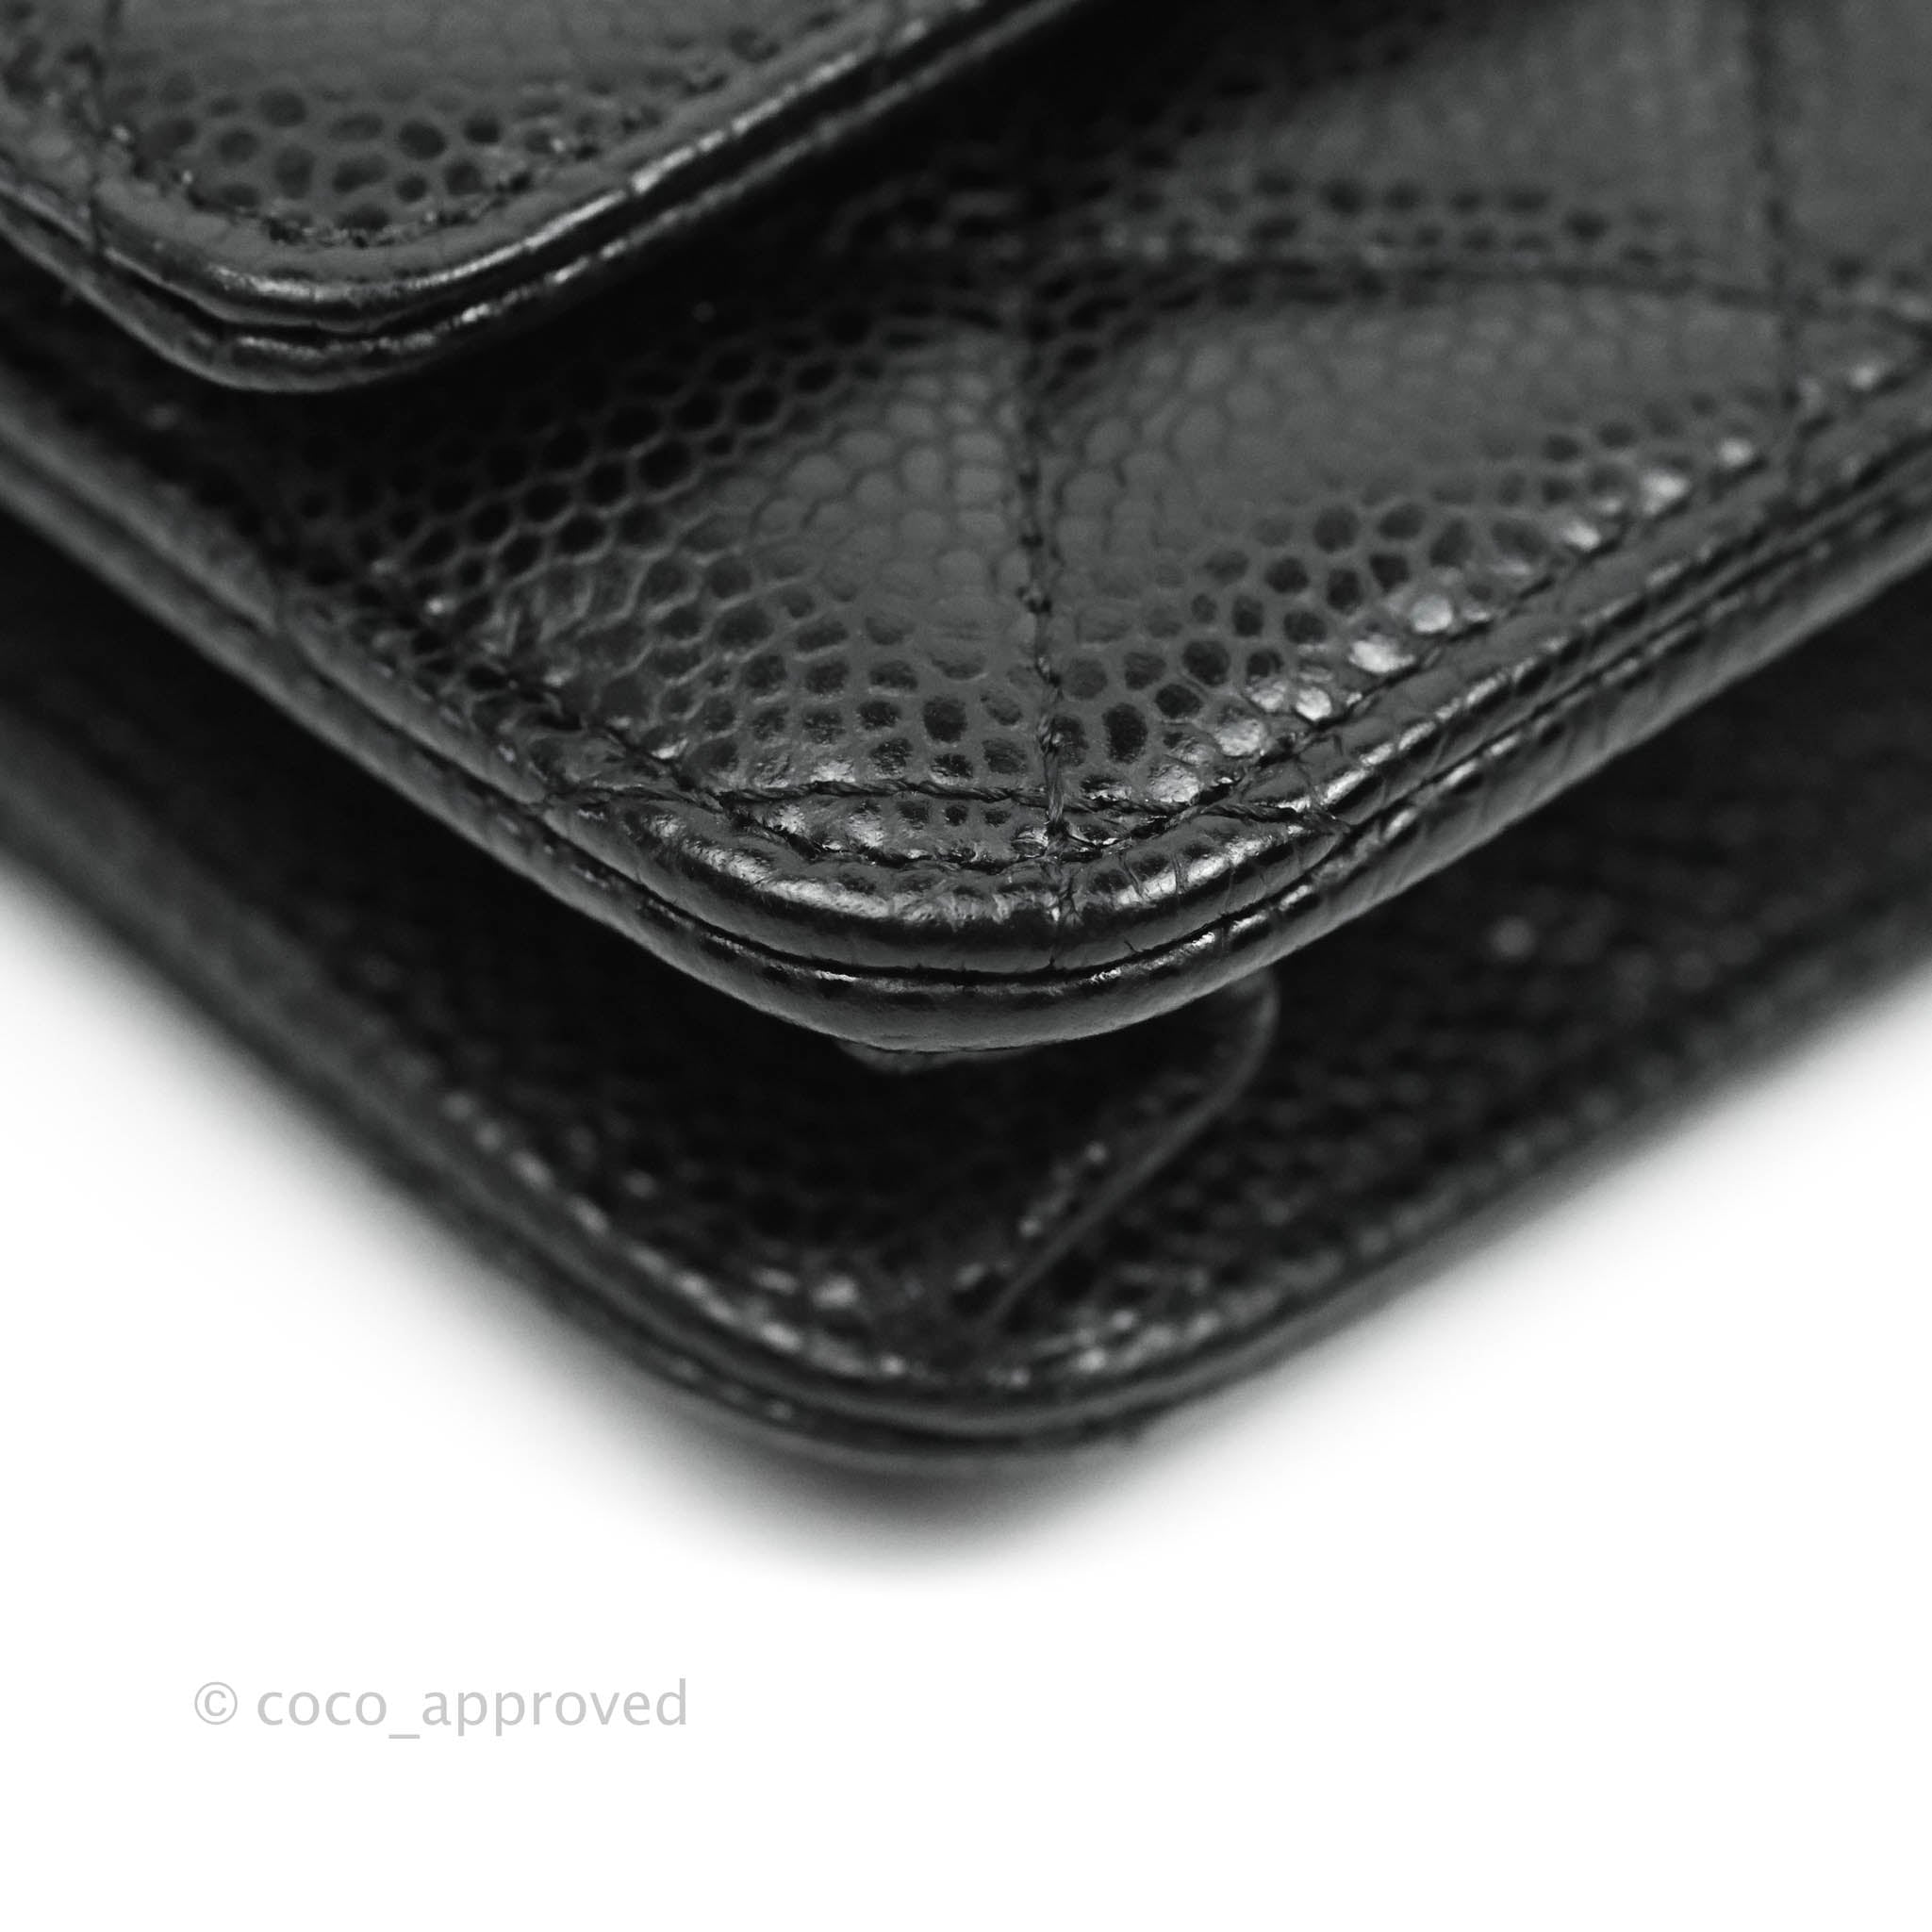 Chanel All Black Reissue 2.55 Double Chevron Flap Wallet